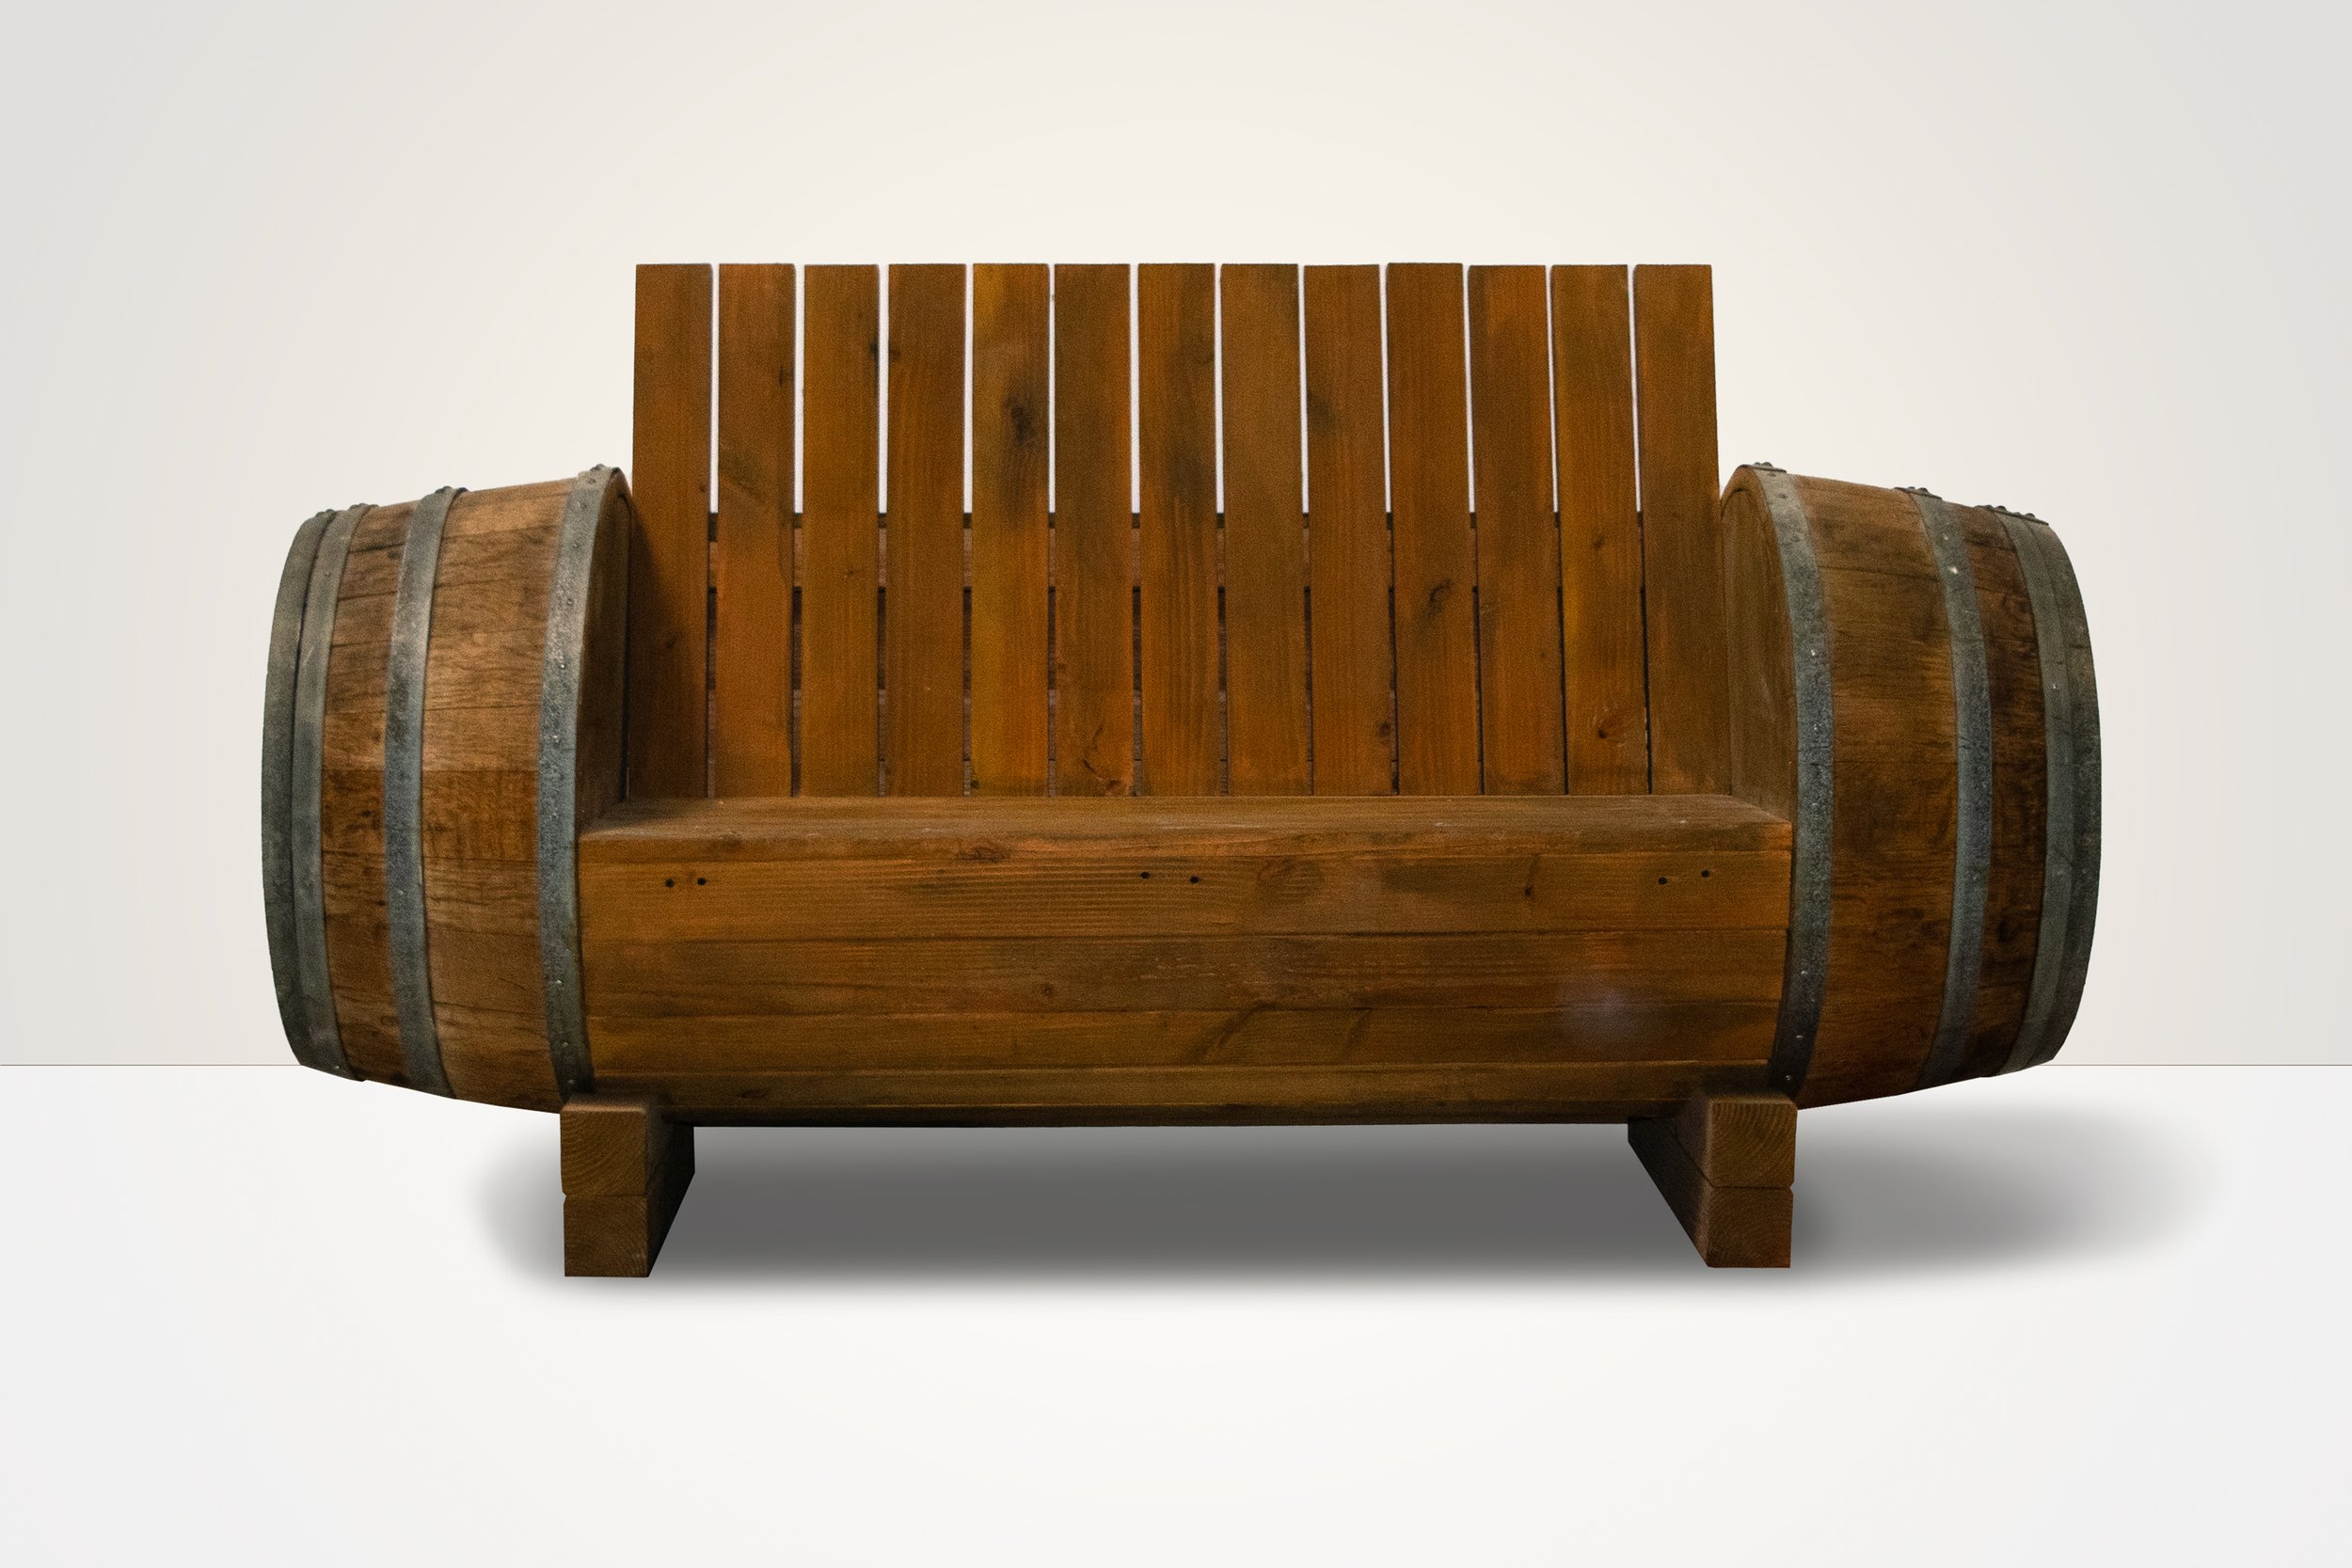 The Whiskey Barrel Sofa